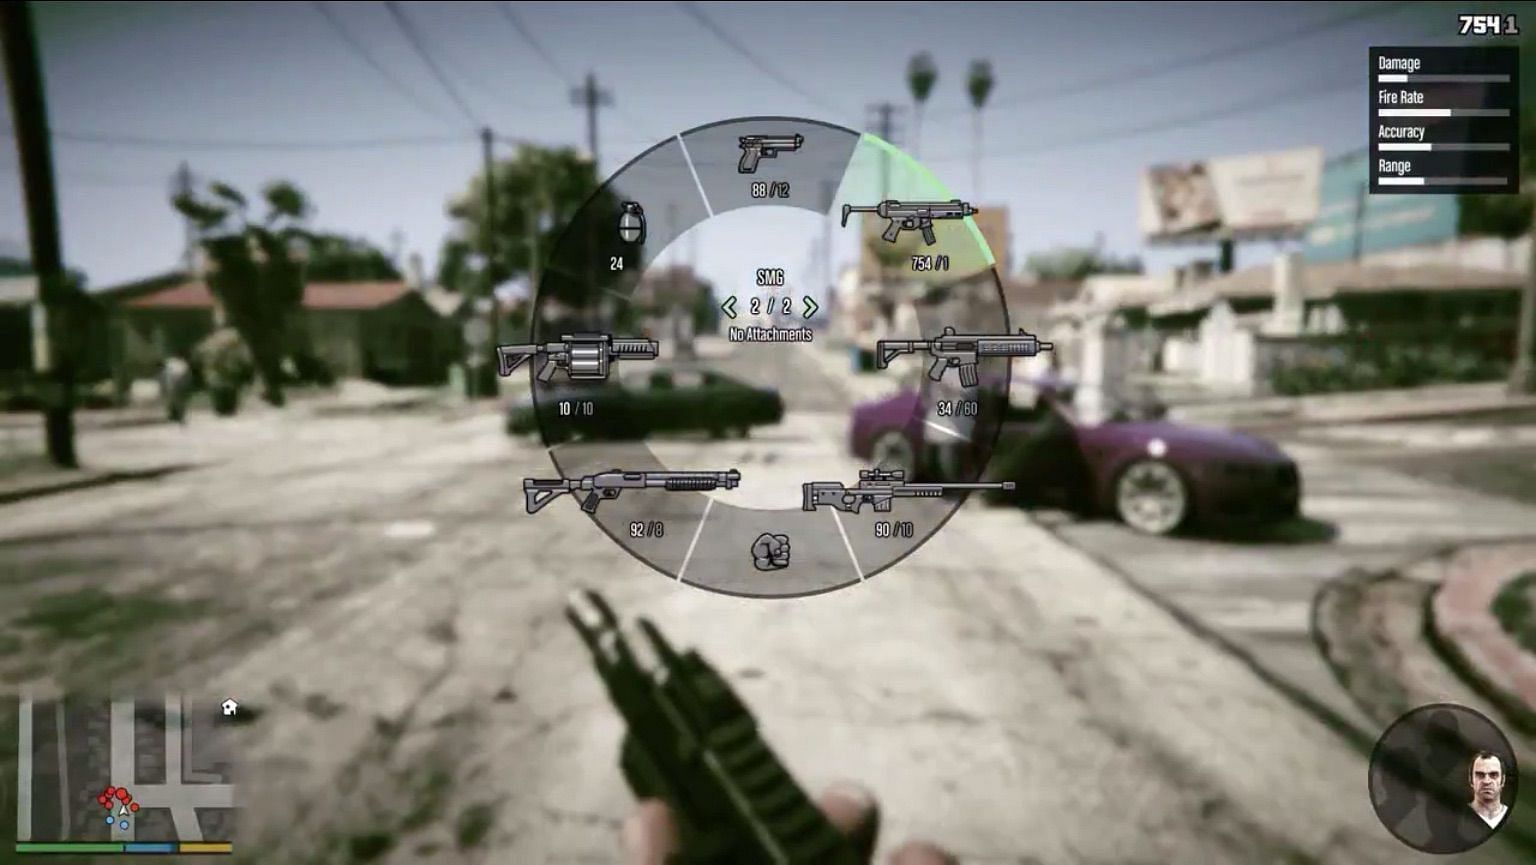 How the Weapon Wheel looks in GTA 5 (Image via Rockstar Games)